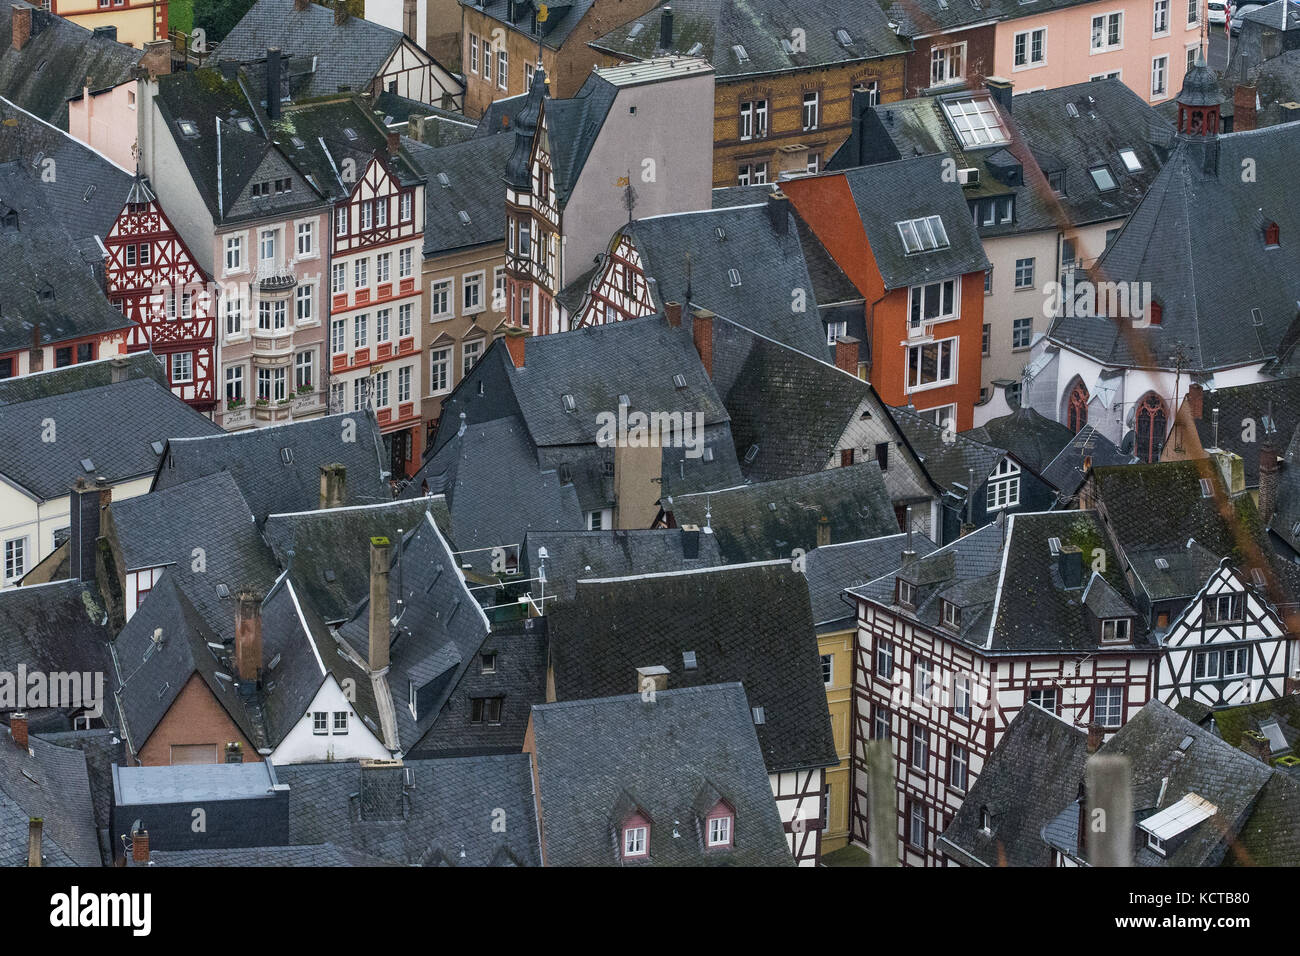 historic centre, Bernkastel-Kues, Mosel, Germany Stock Photo